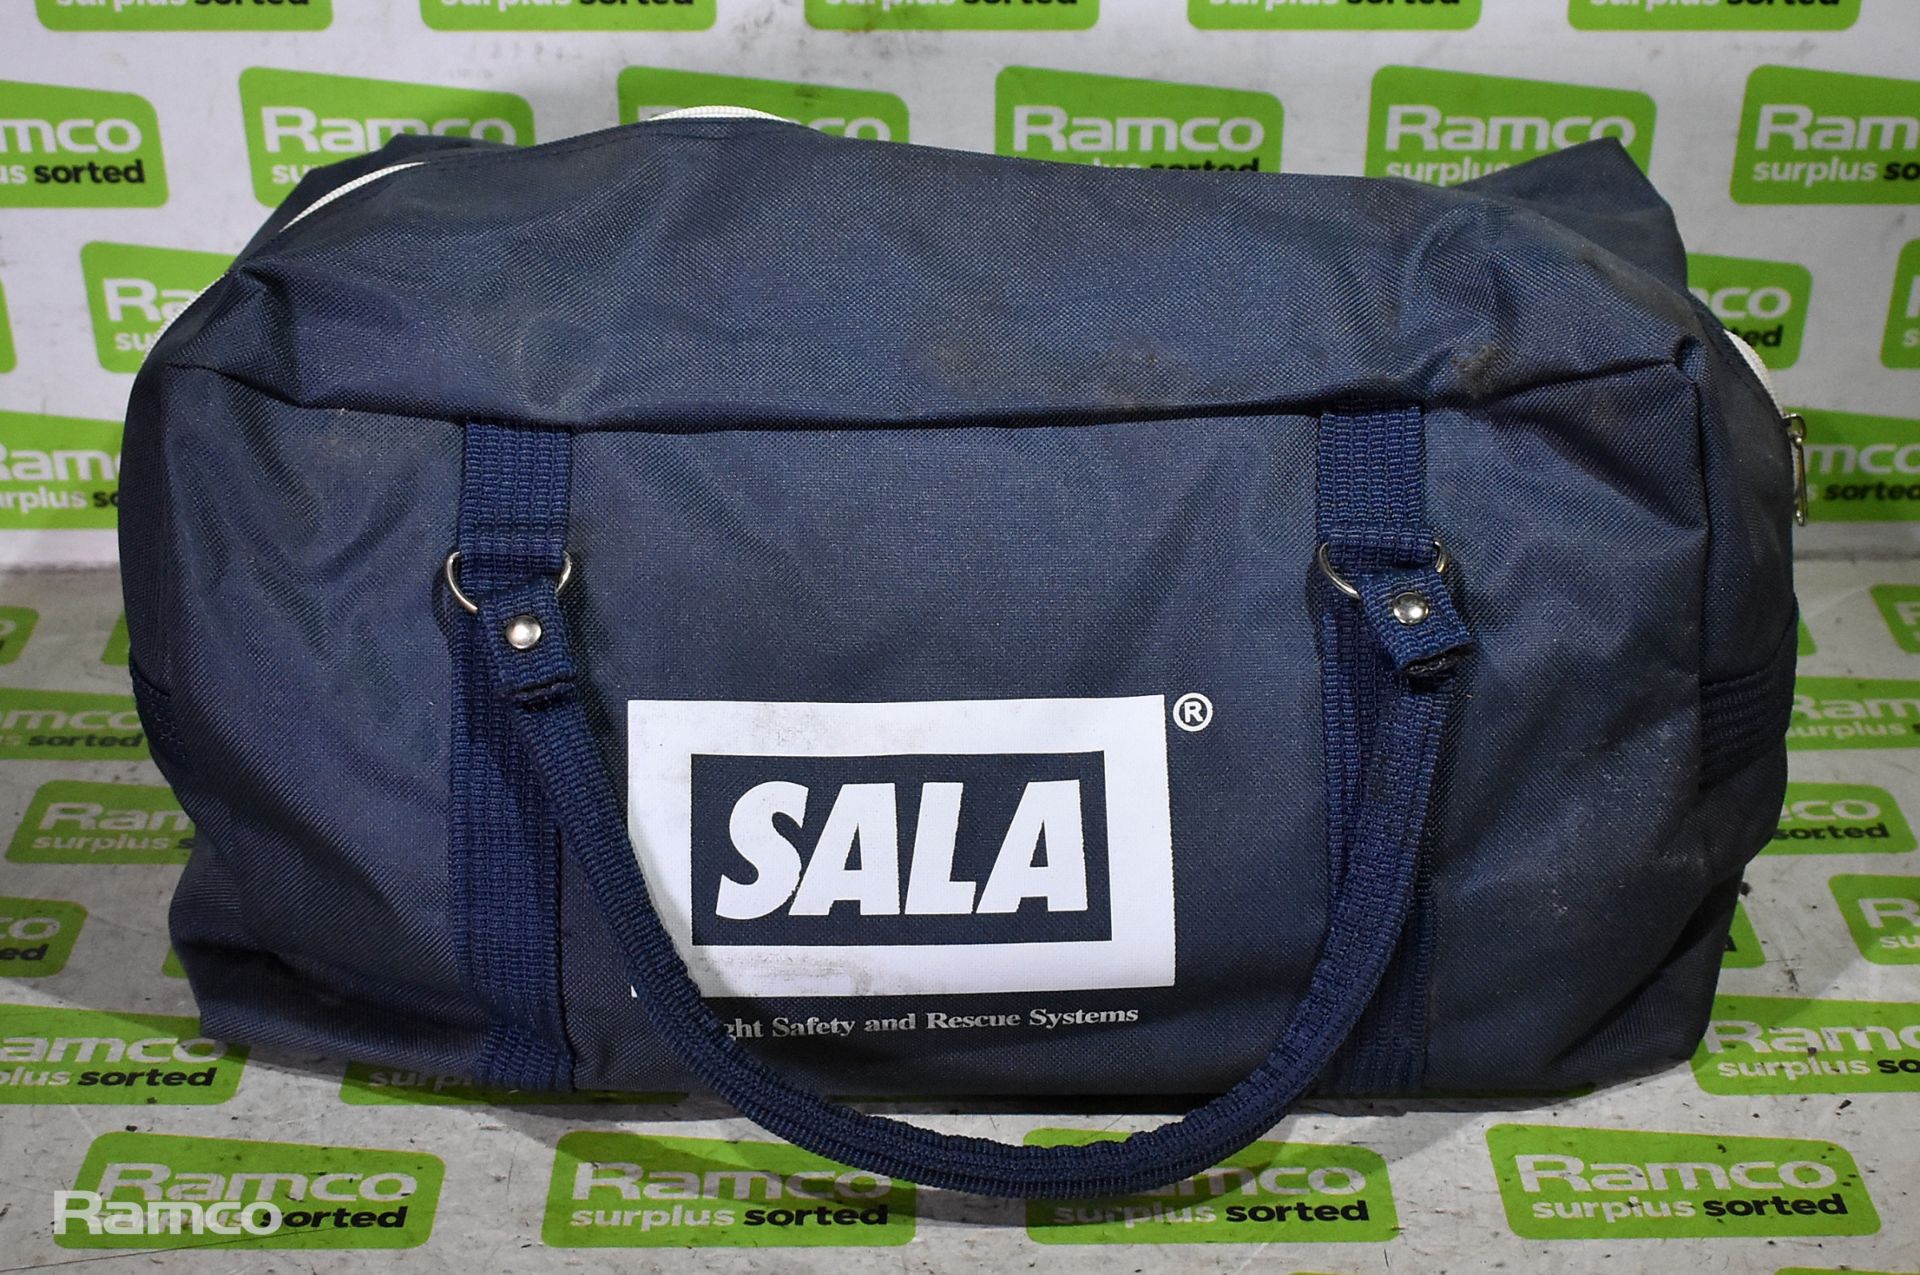 Sala harness kit - Sala 1112918 full body harness, 14mm x 5m polyamide rope - Image 5 of 5